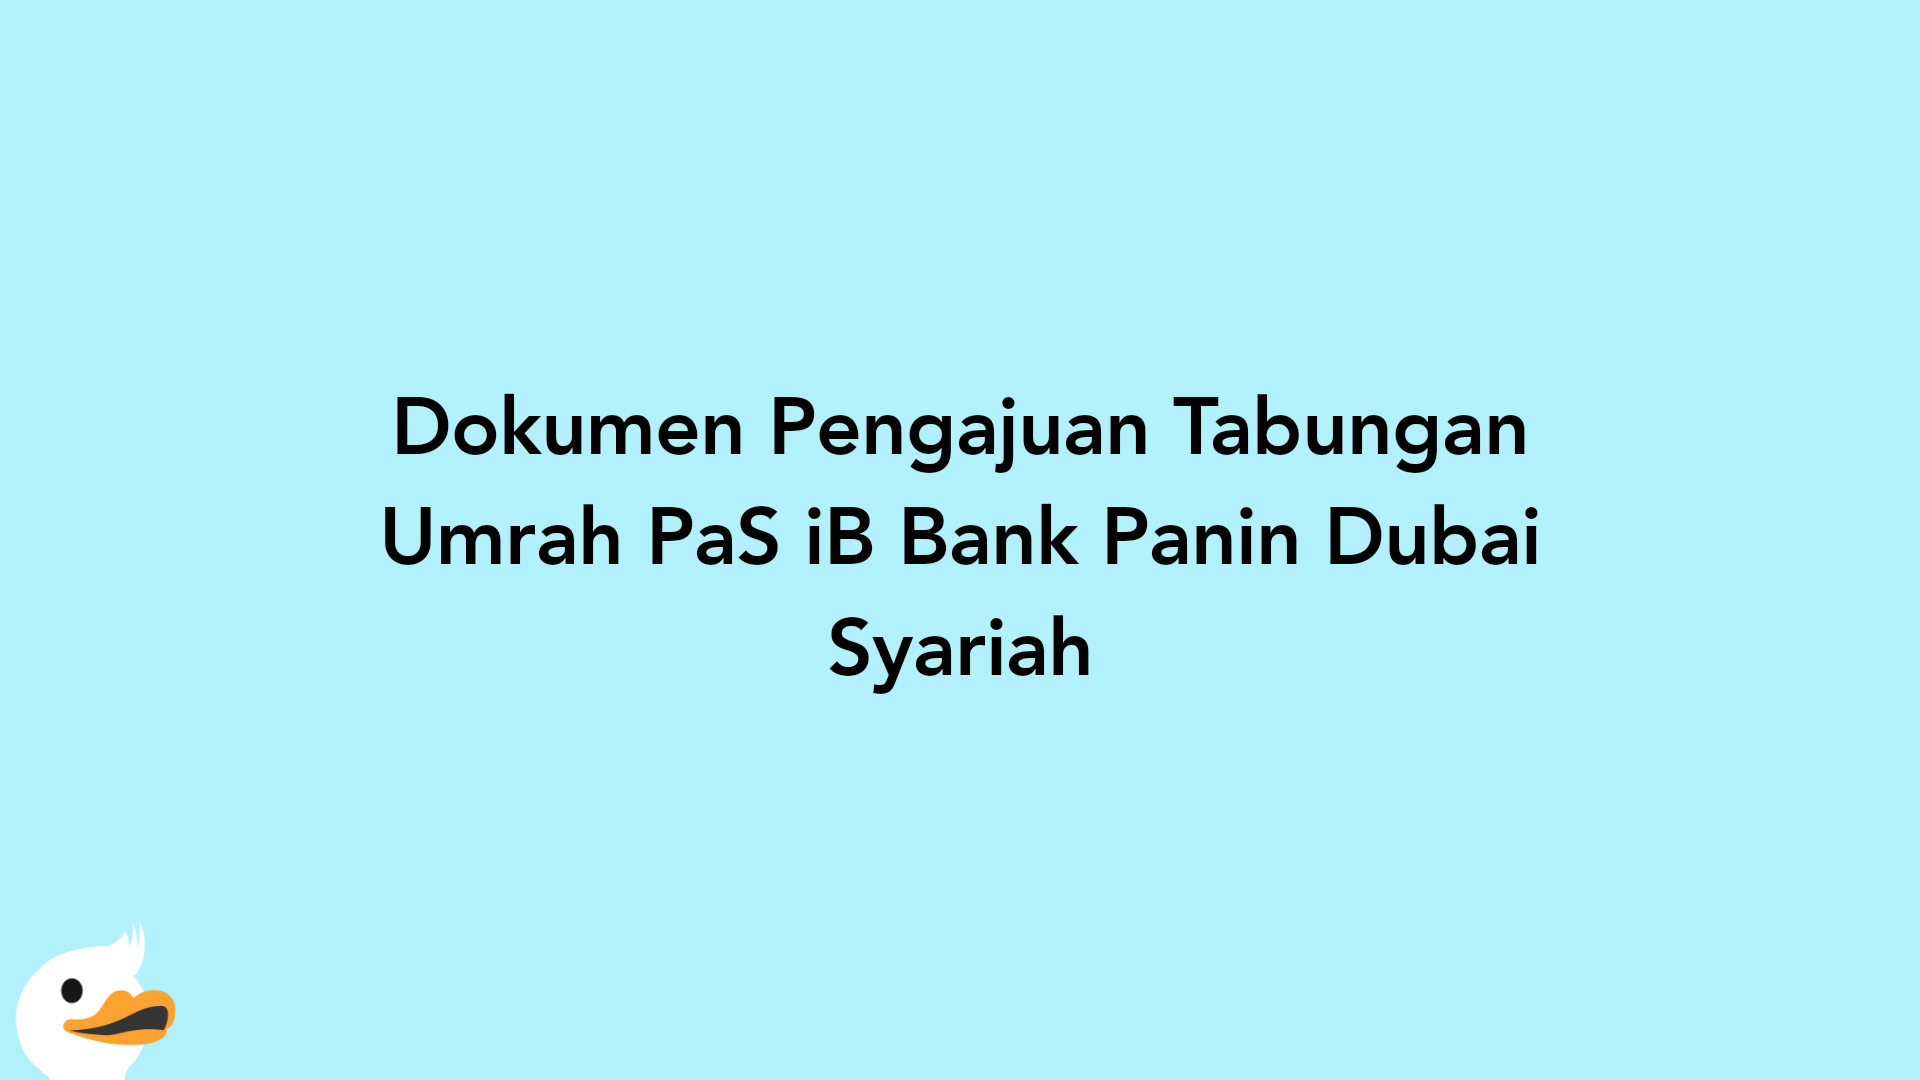 Dokumen Pengajuan Tabungan Umrah PaS iB Bank Panin Dubai Syariah